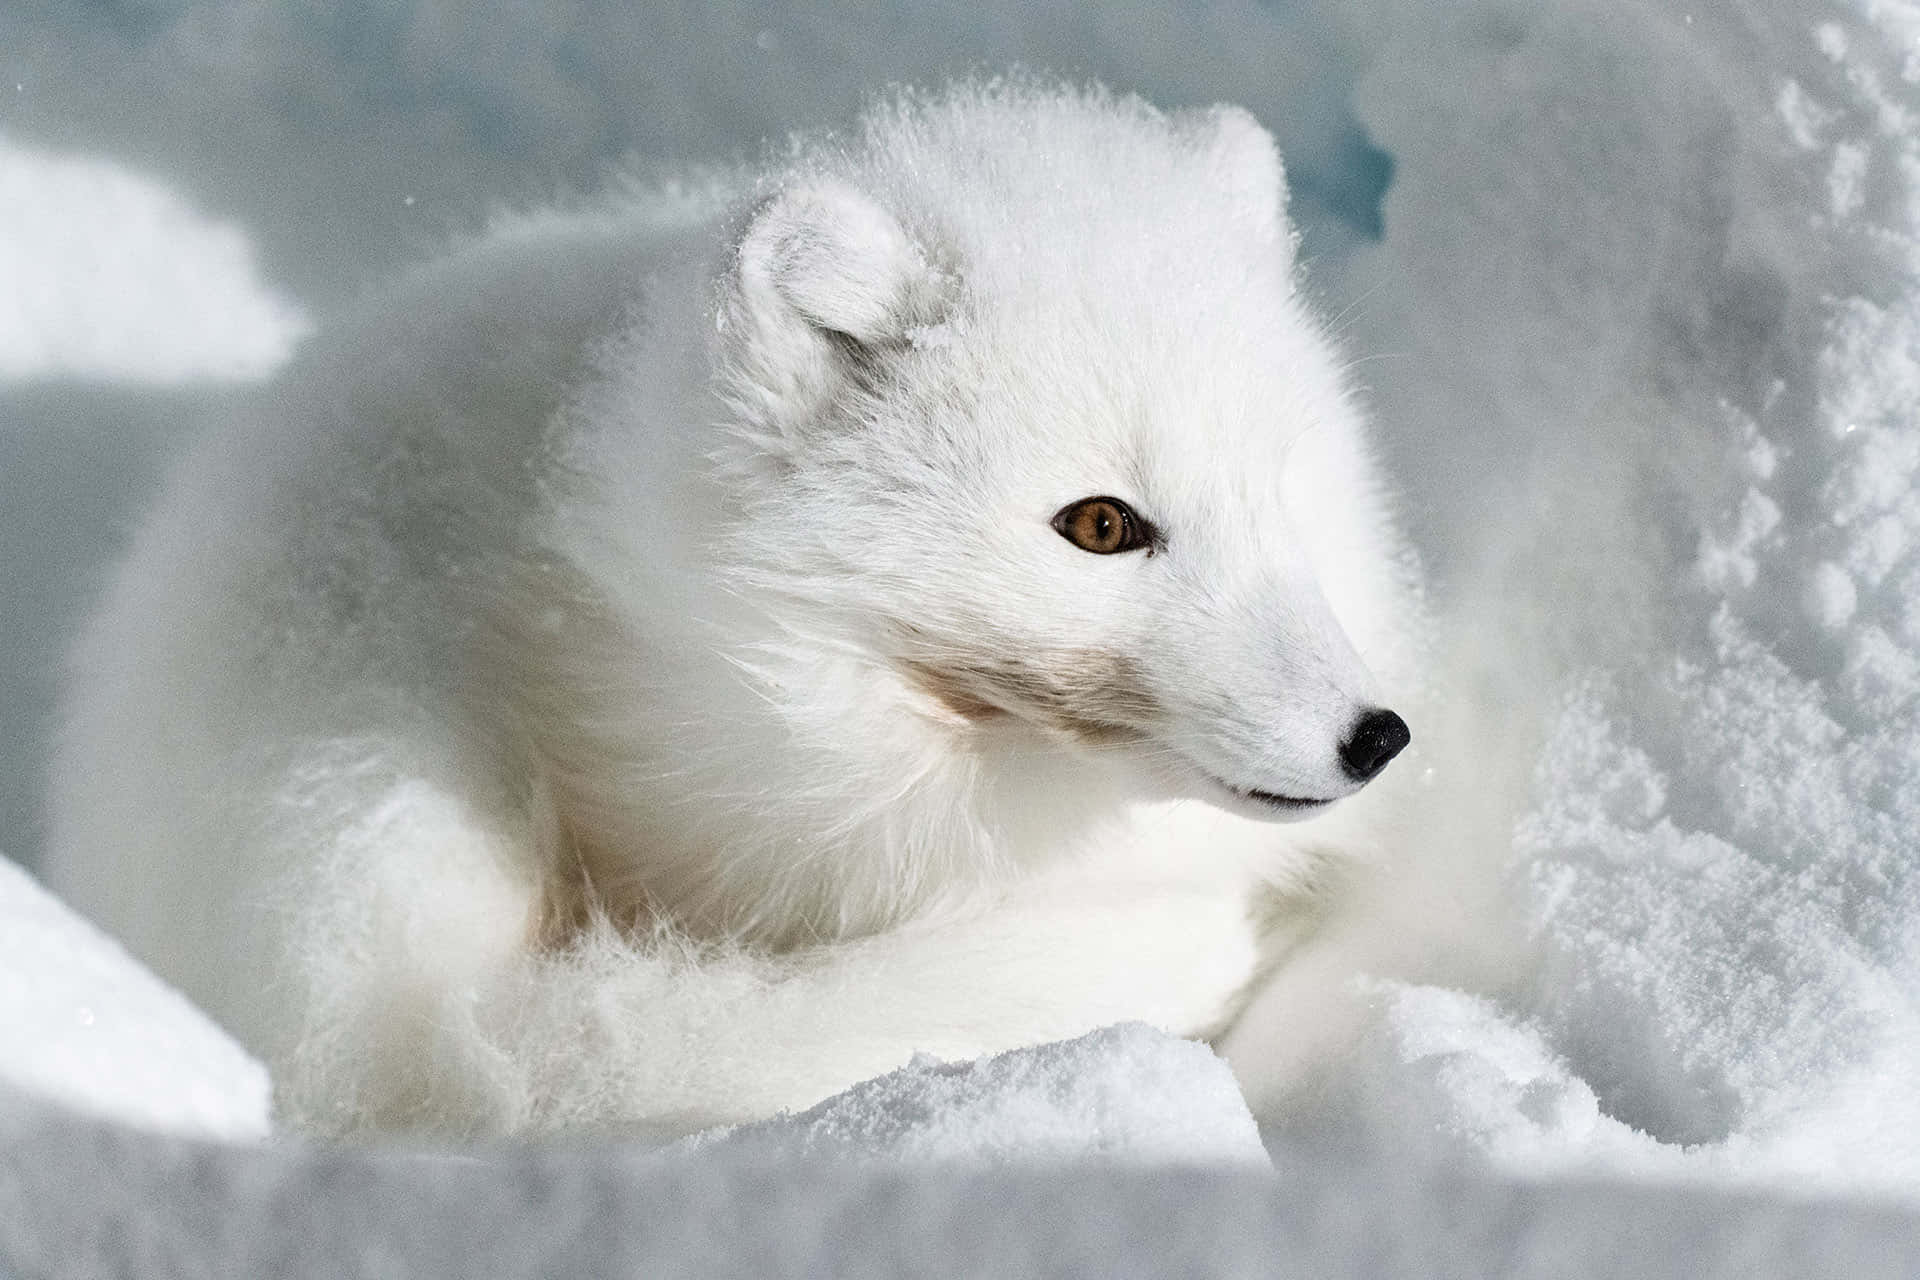 A beautiful Arctic fox in its natural habitat.